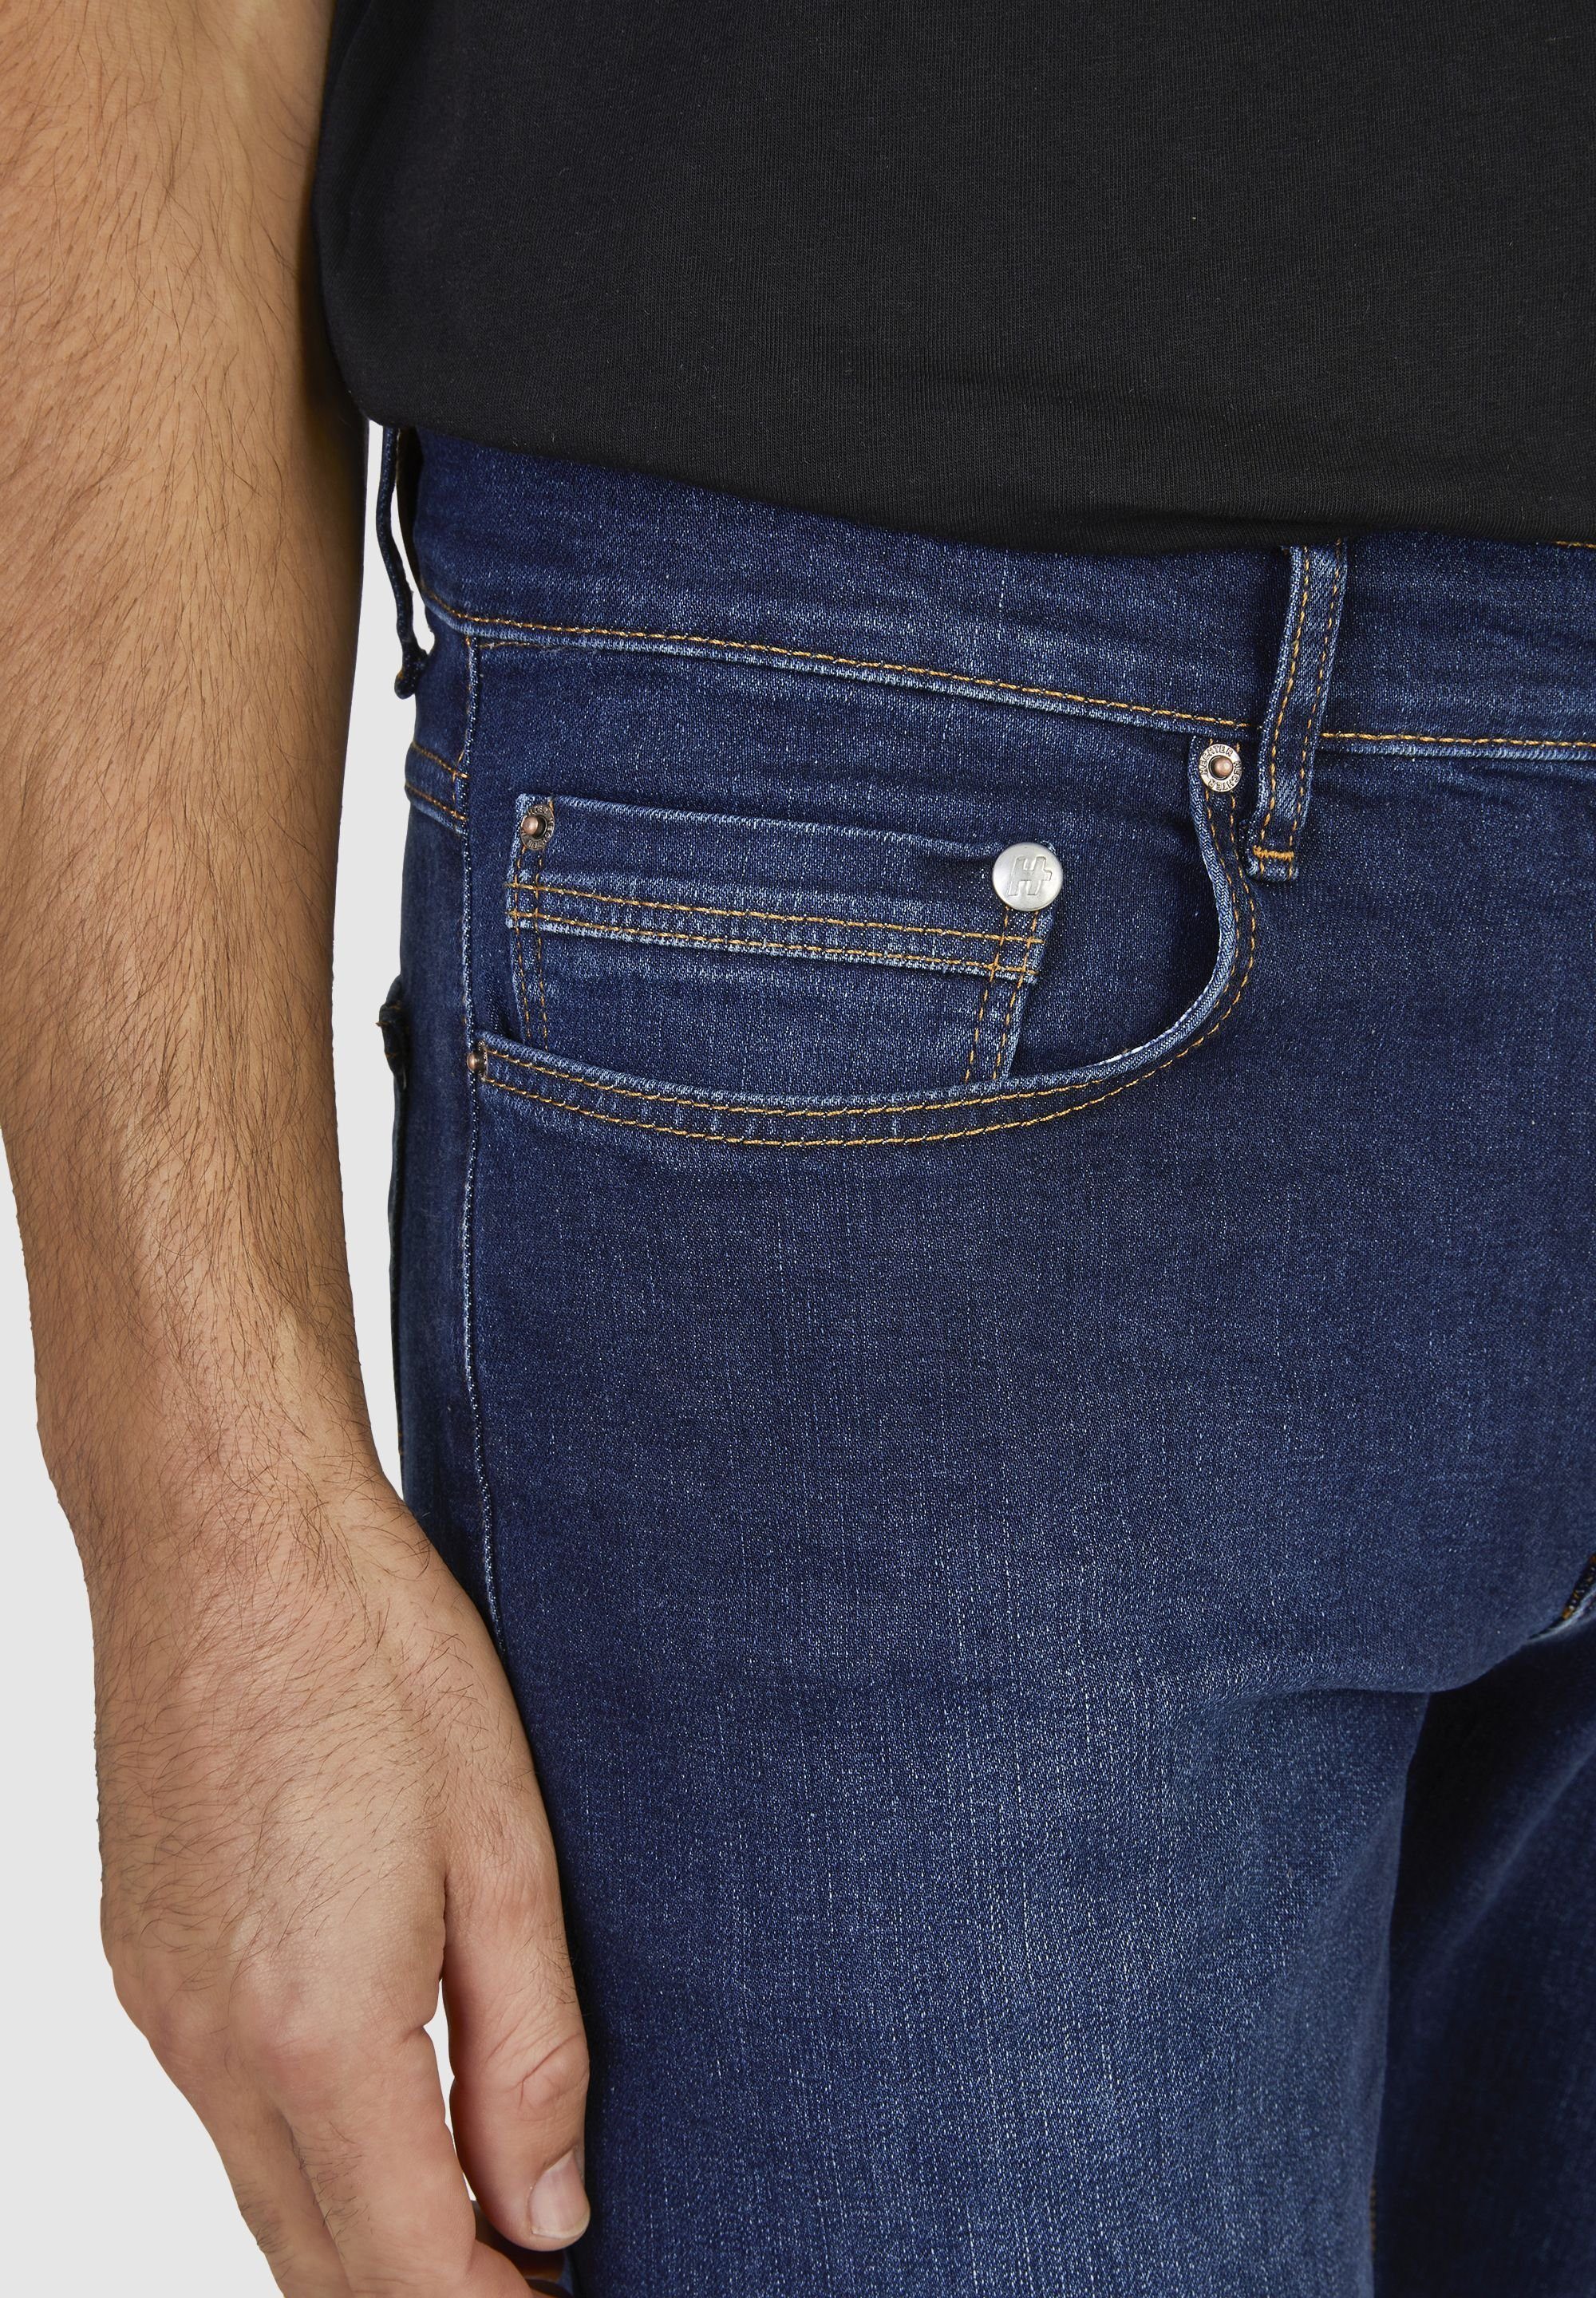 PARIS 5-Pocket-Jeans navy HECHTER Unimuster